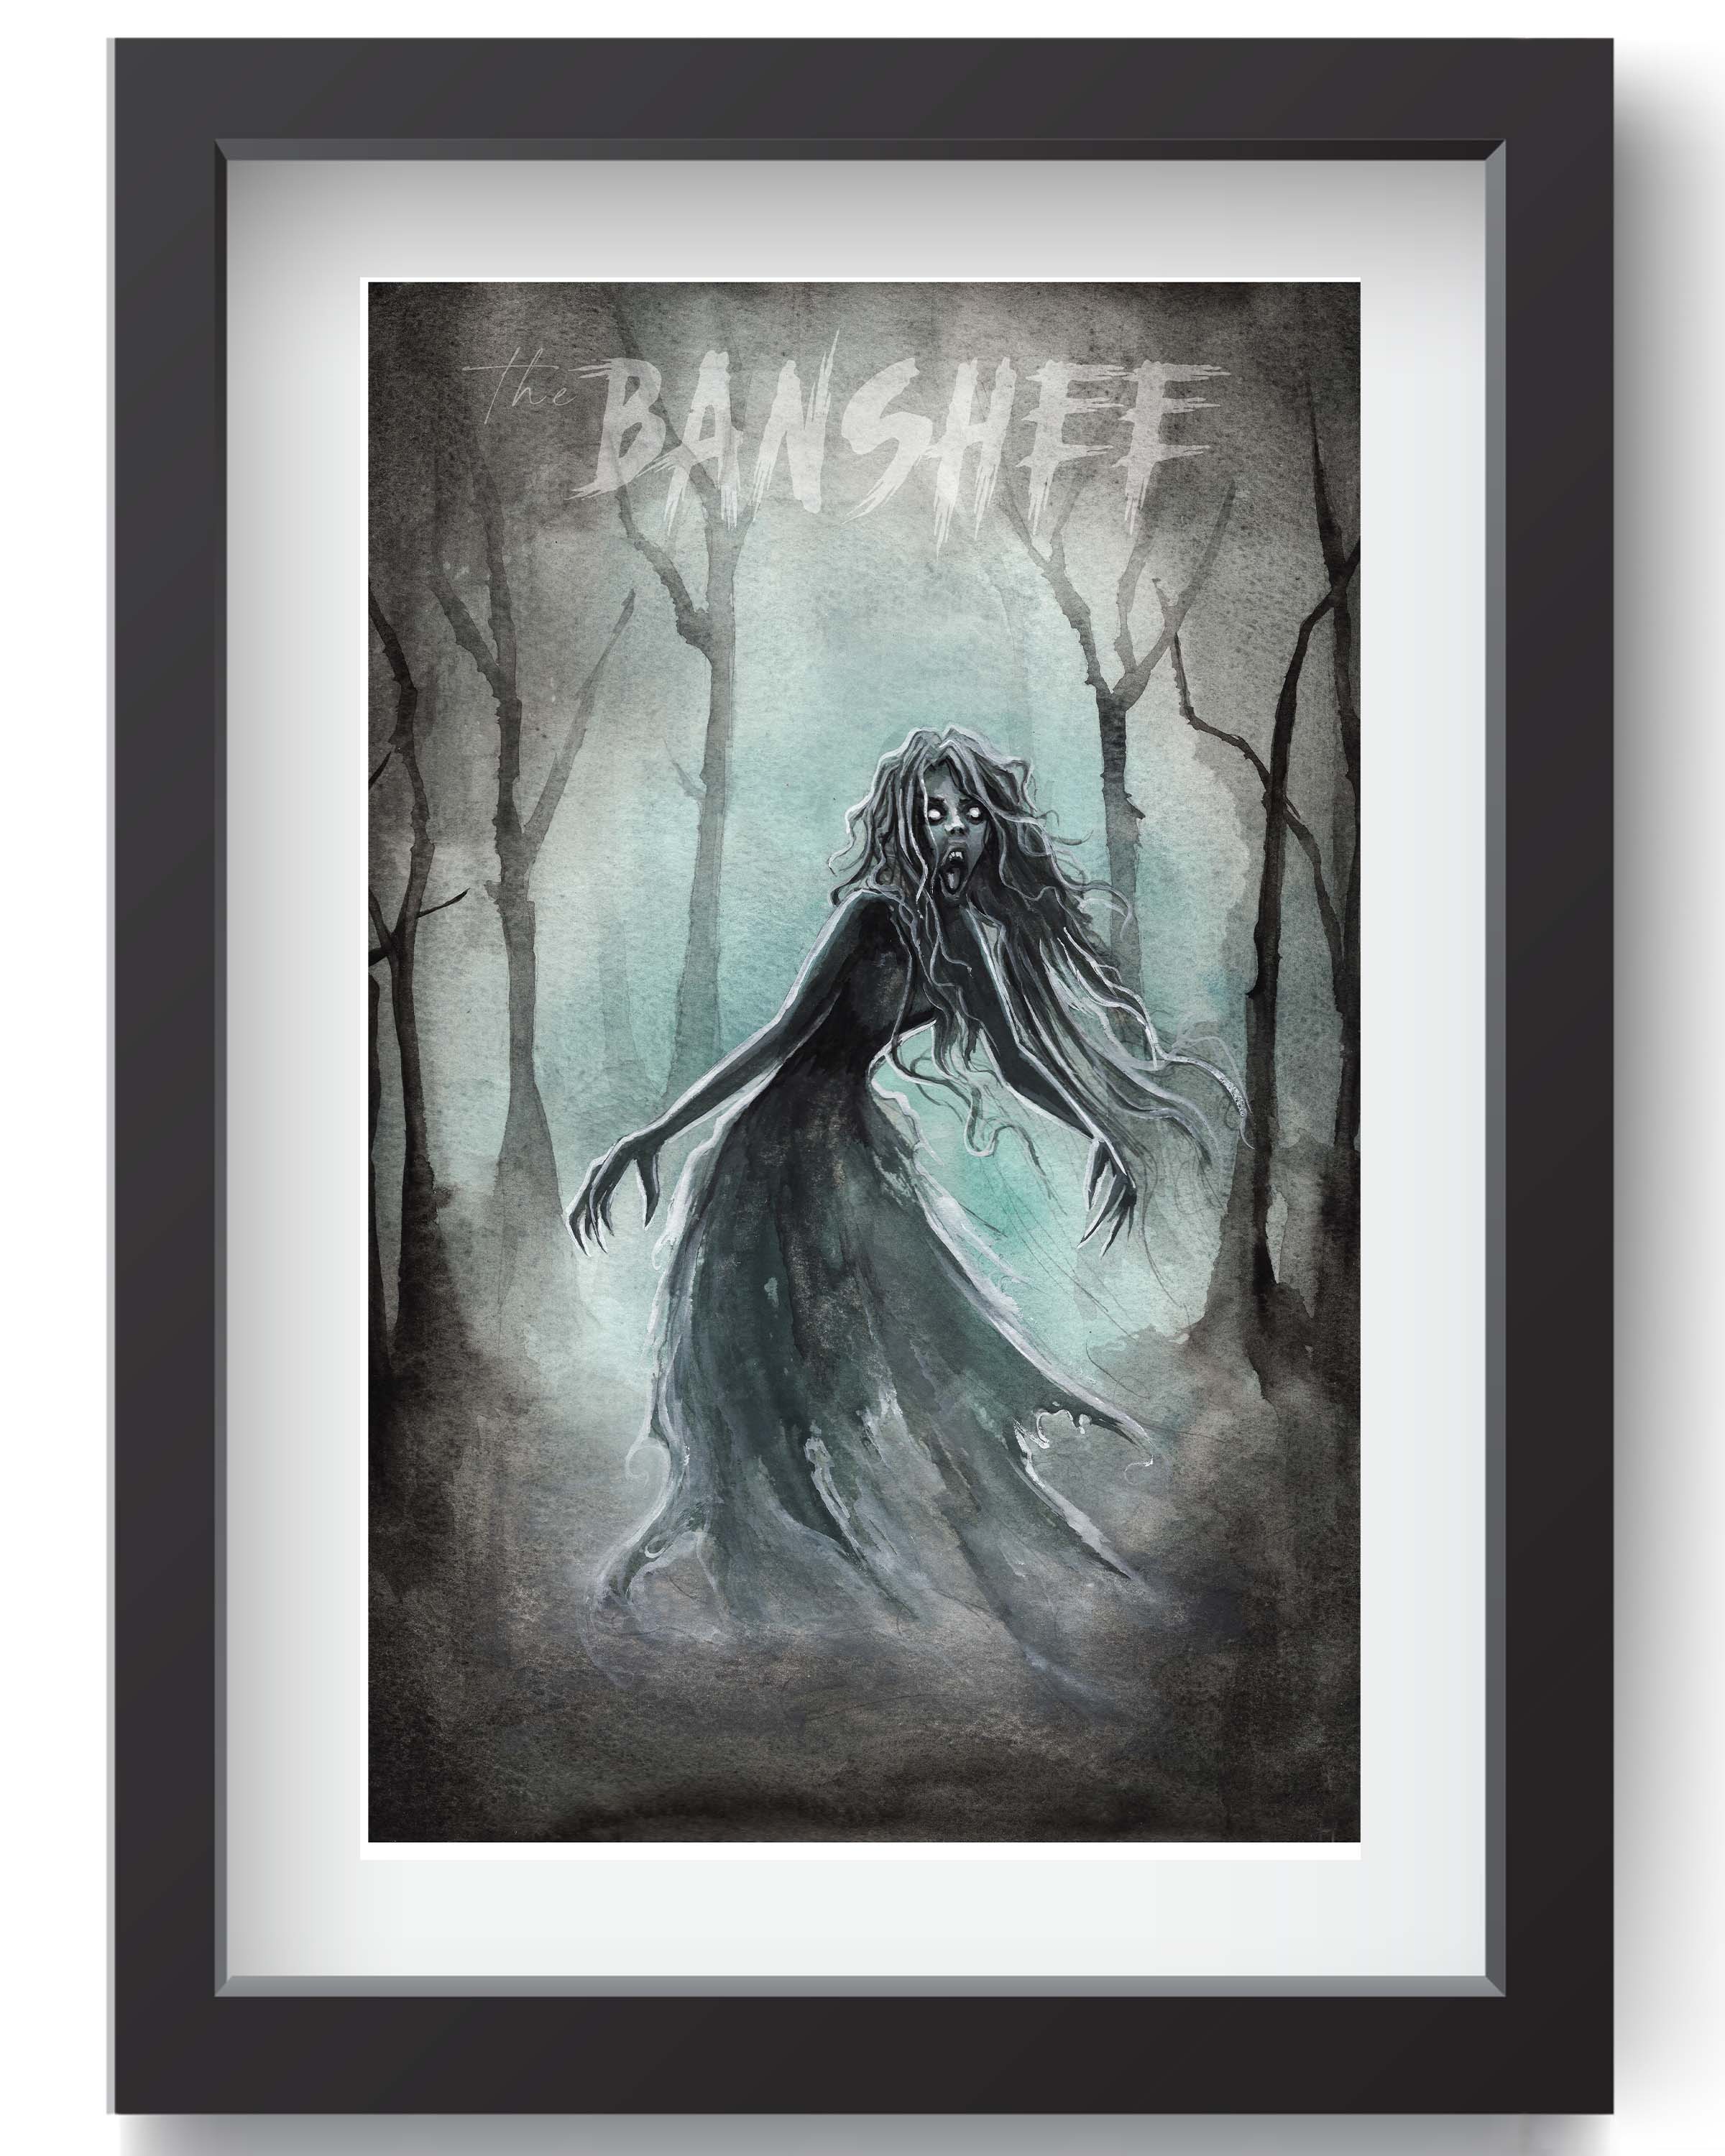 The Banshee Print